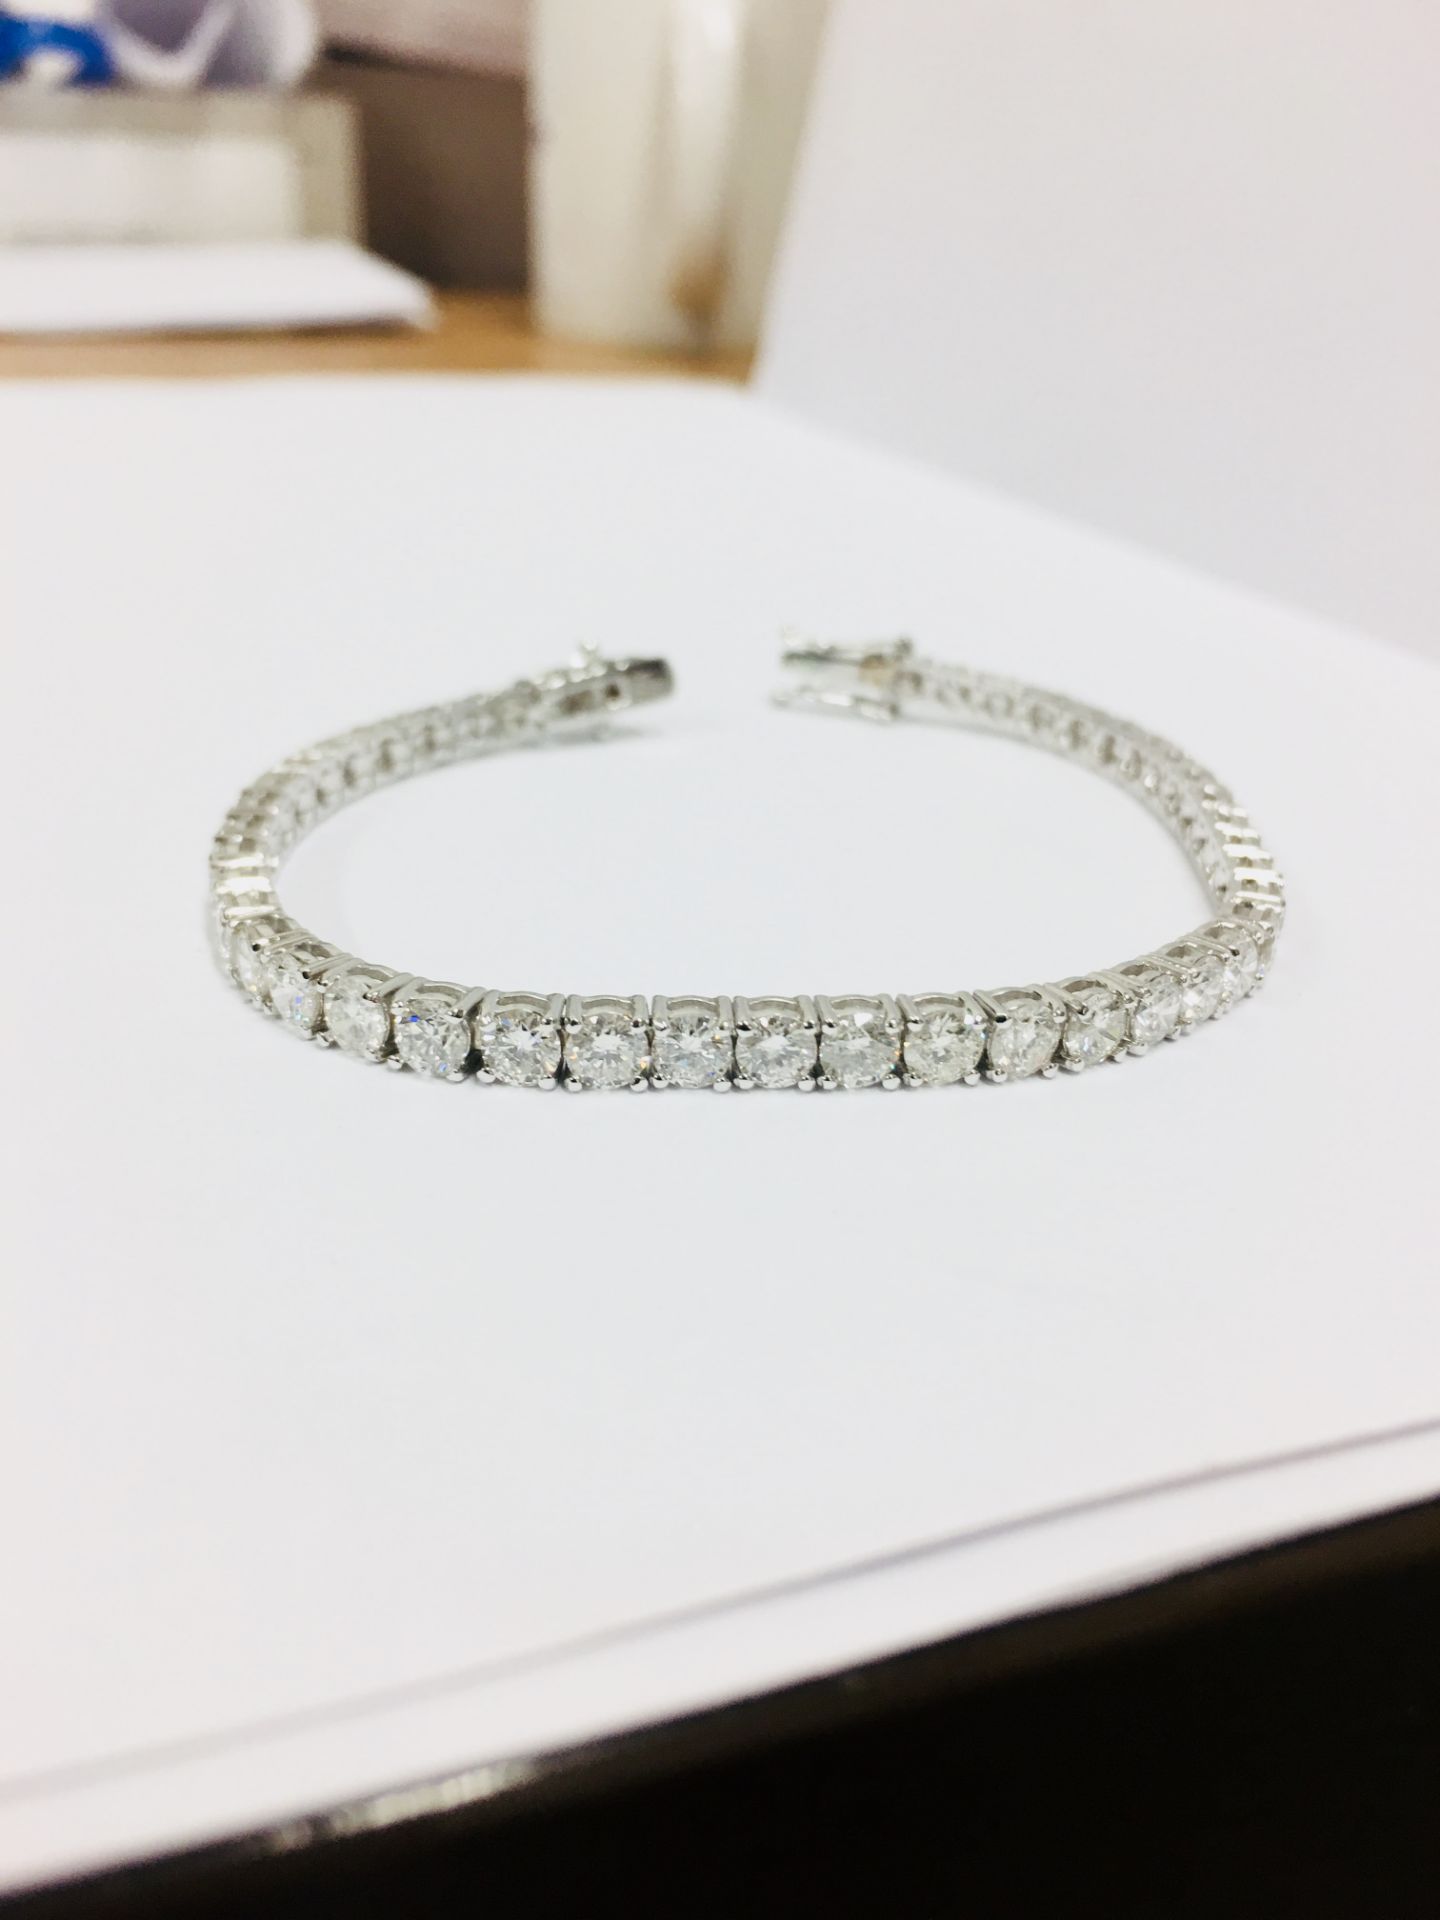 10.00Ct Diamond Tennis Bracelet Set With Brilliant Cut Diamonds Of H Colour, Si2-3 Clarity. - Image 18 of 26